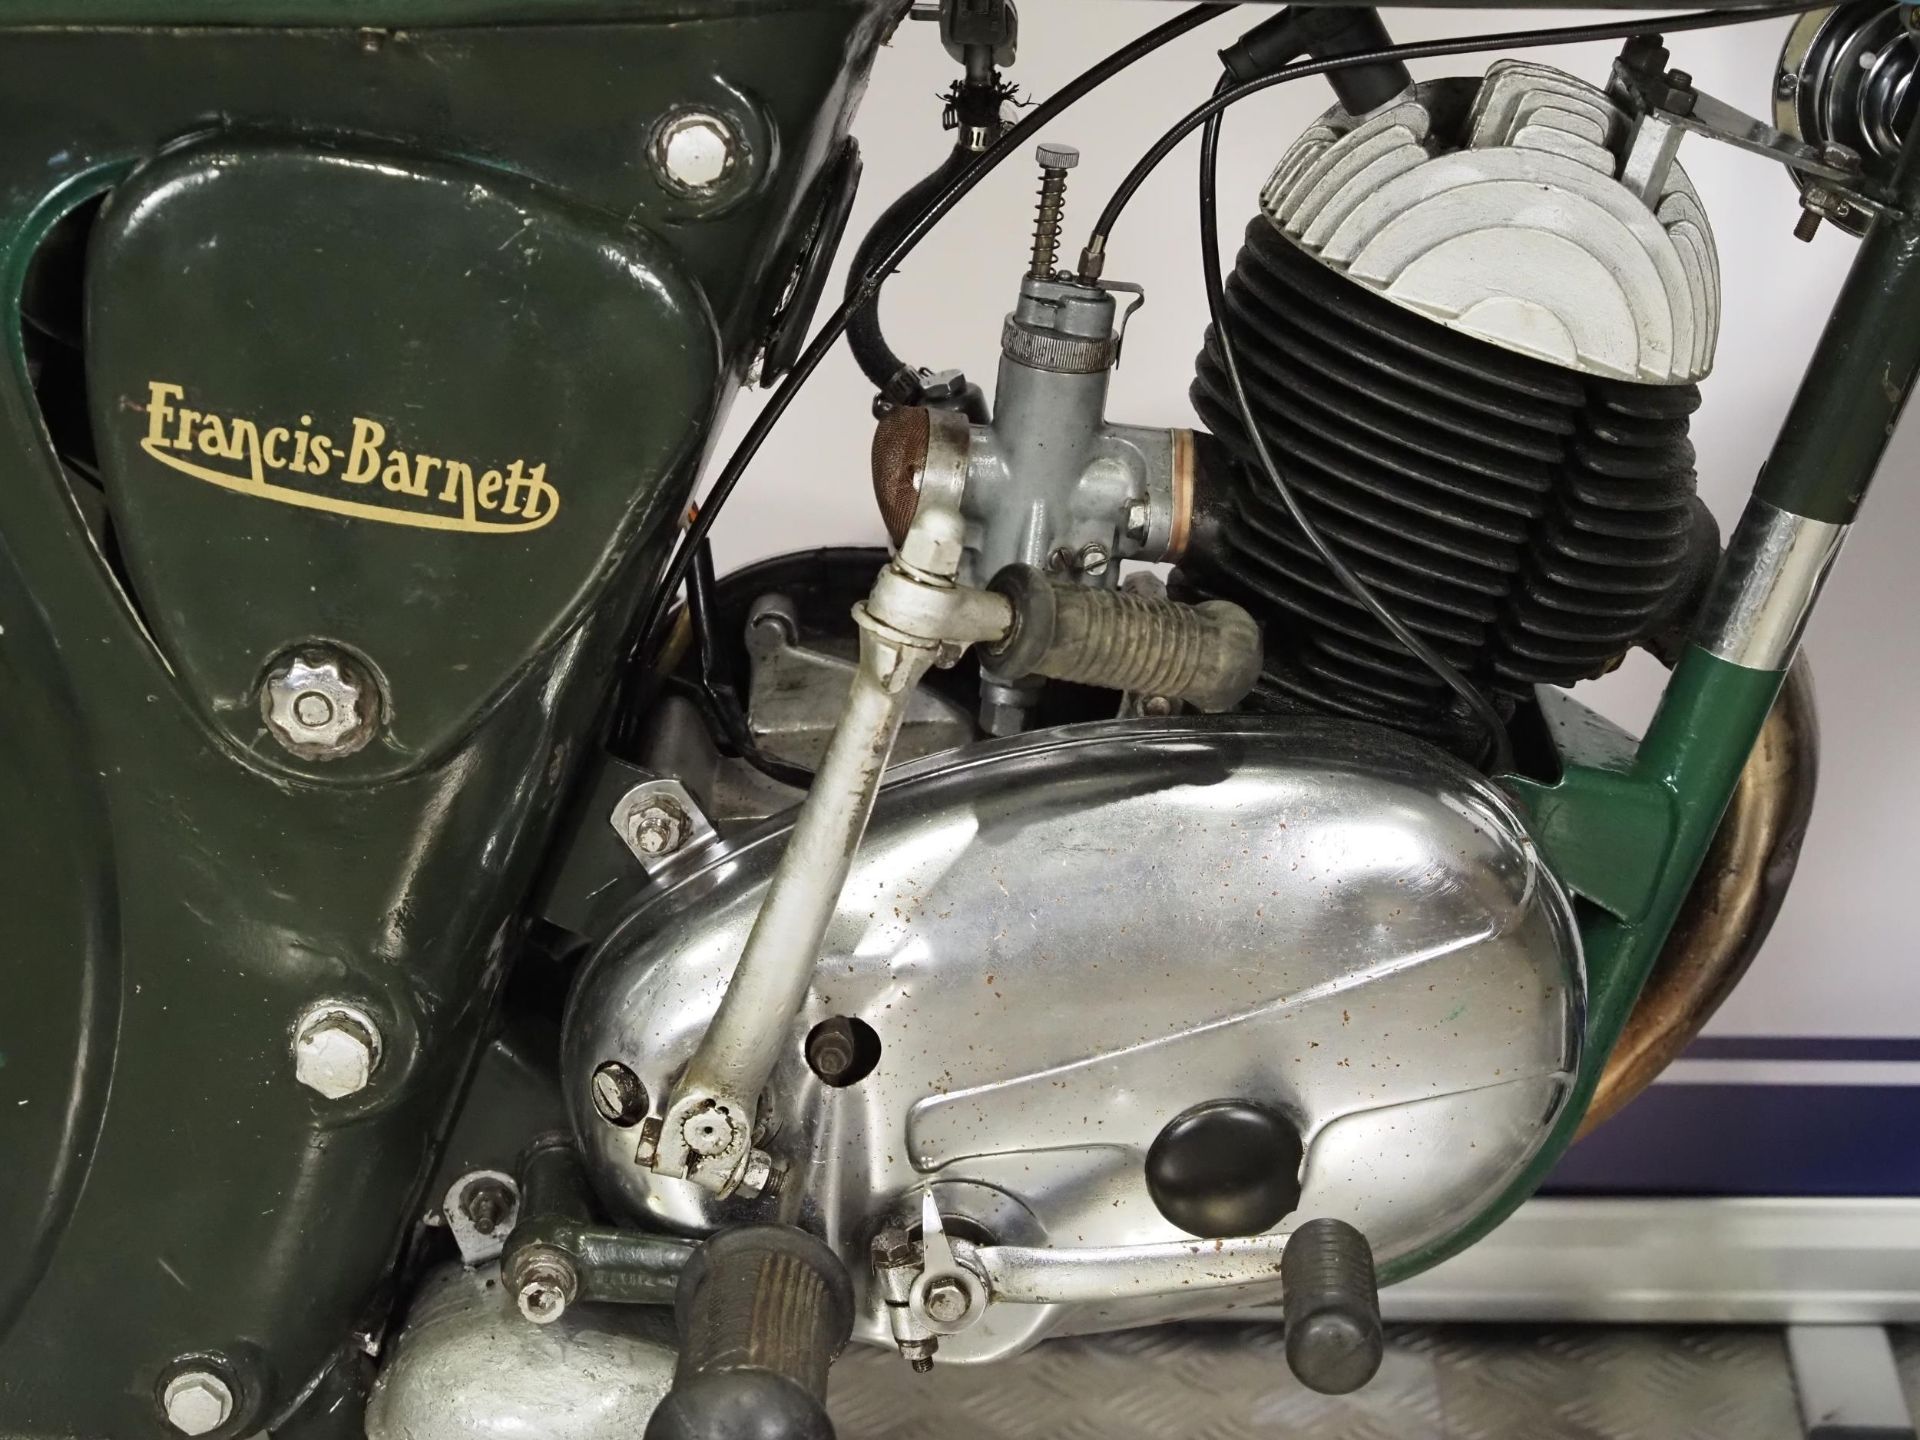 Francis Barnett Plover motorcycle. 1958. 150cc Frame No. 26943 Engine No. 15T8140M Runs and rides. - Image 5 of 7